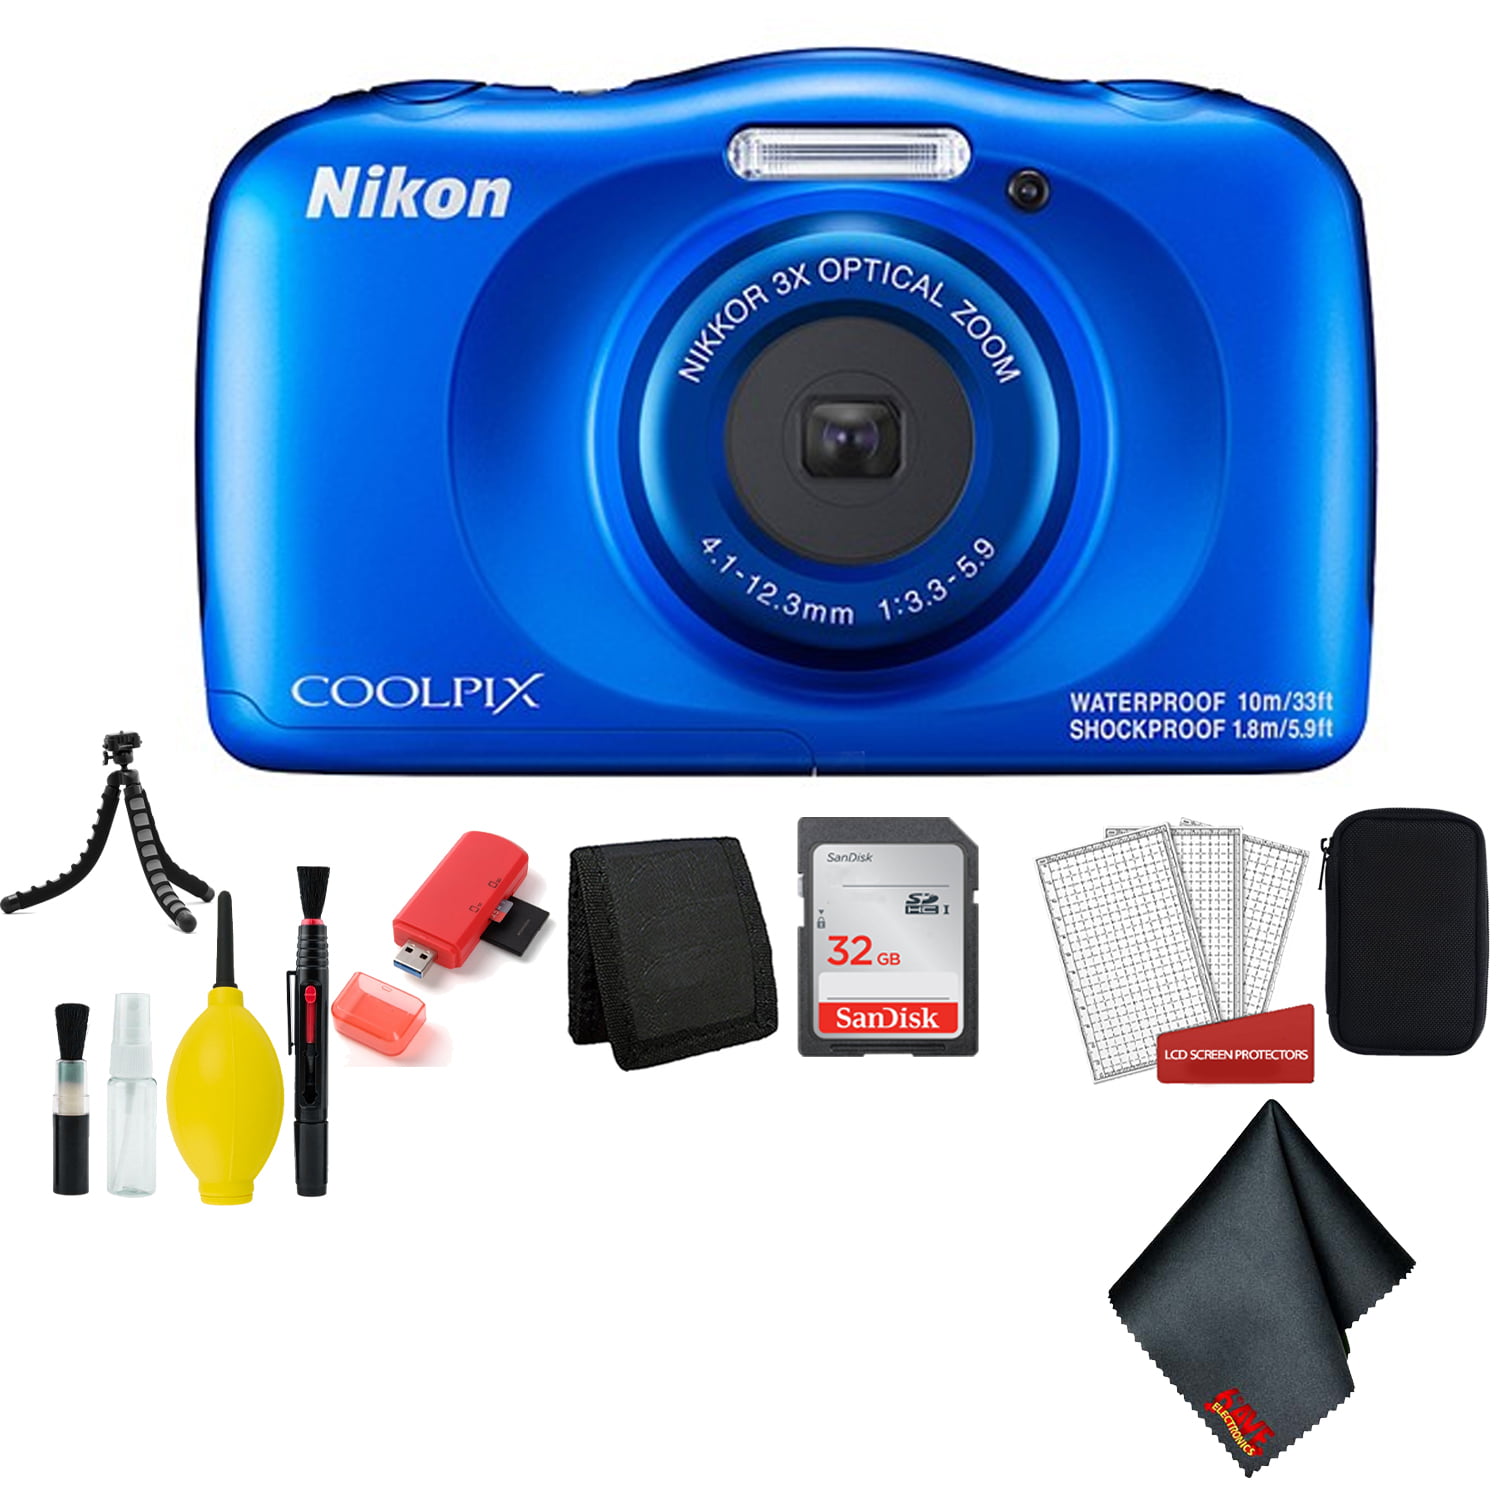 Hamburger Snikken Bevriezen Nikon Coolpix W150 Wi-Fi Rugged Waterproof Digital Camera (Blue) 13.2 MP  Bundle with 32GB Sandisk Memory Card + Floating Strap + Carrying Case +  More (Intl Model) - Walmart.com